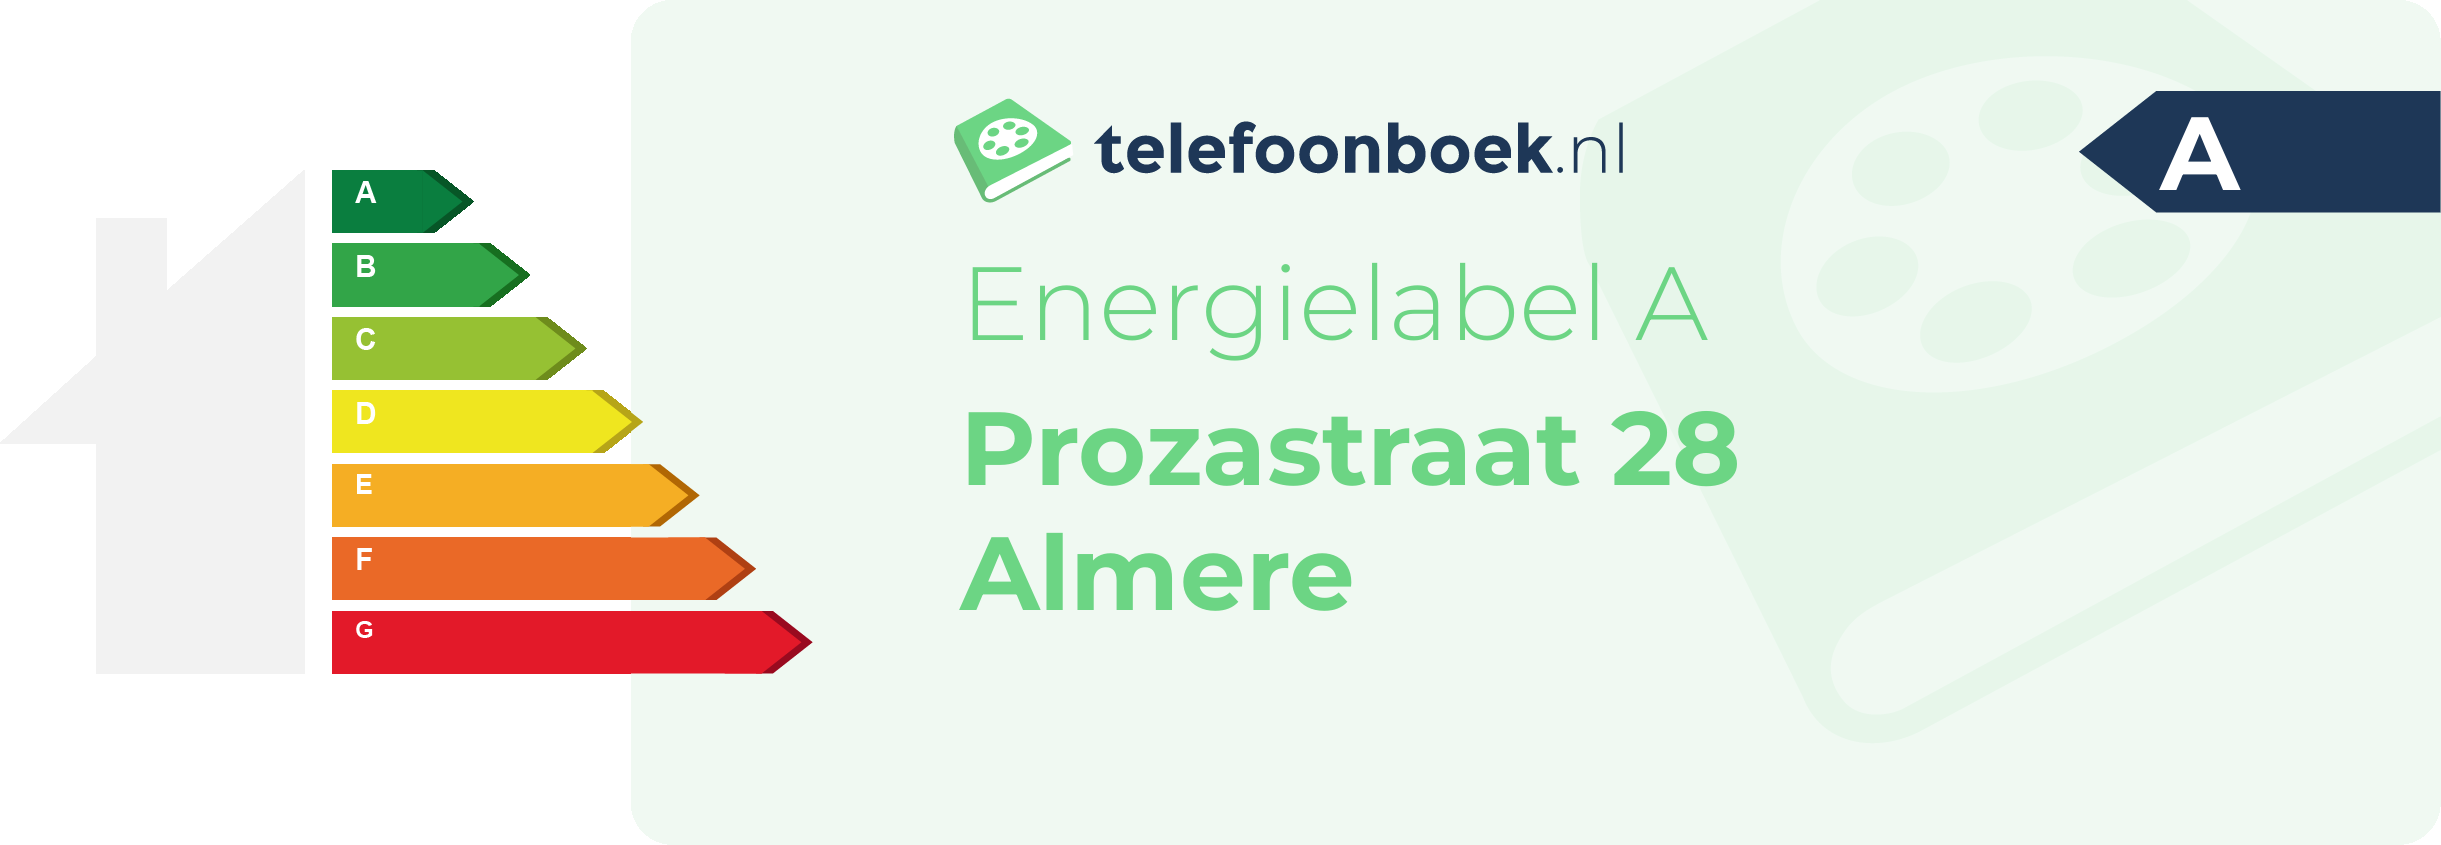 Energielabel Prozastraat 28 Almere